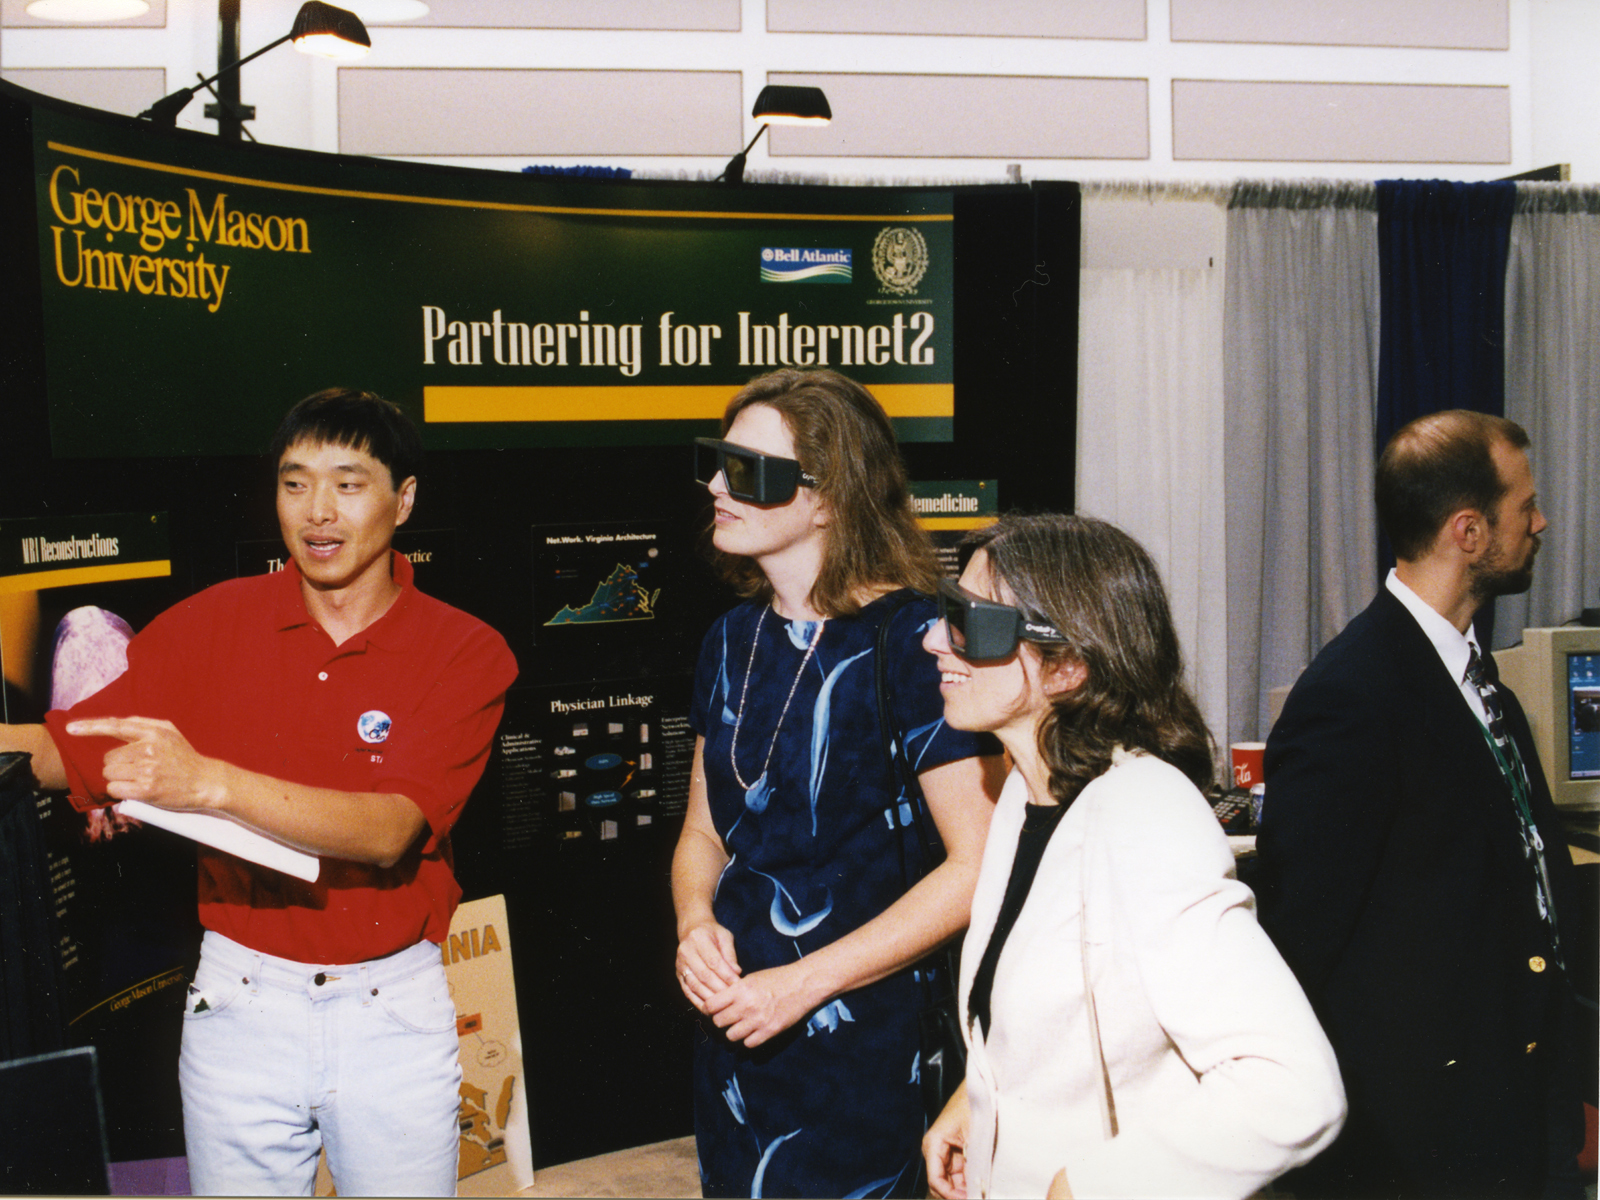 Virtual reality equipment demonstration, World Conference on Information Technology, George Mason University, 1998